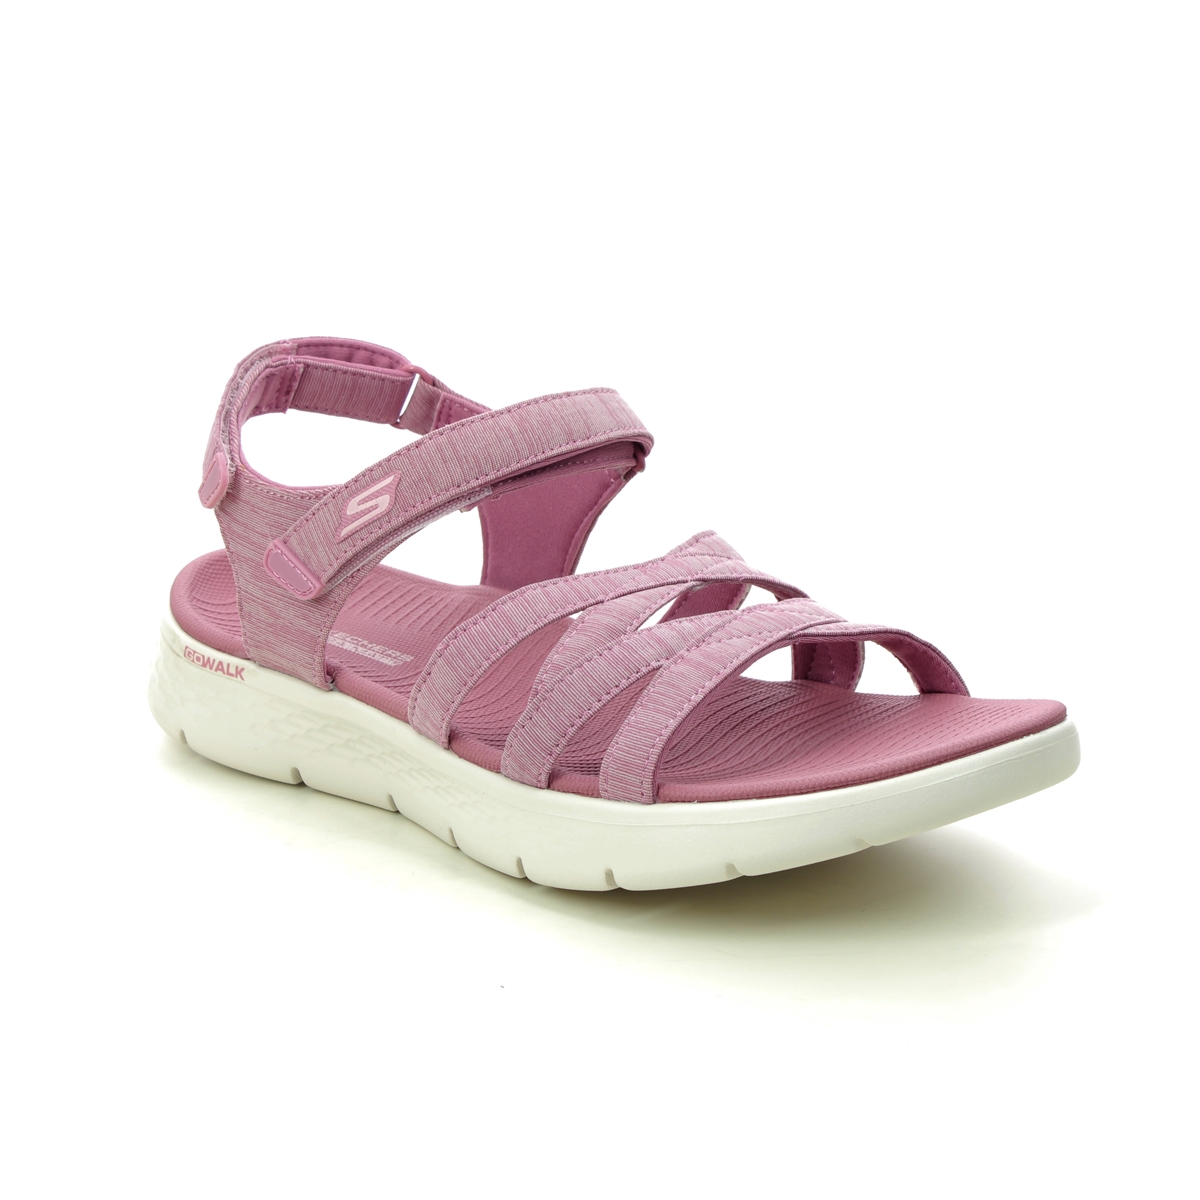 Skechers Go Walk Sunshine MVE Mauve Womens Comfortable Sandals 141450 in a Plain Textile in Size 7